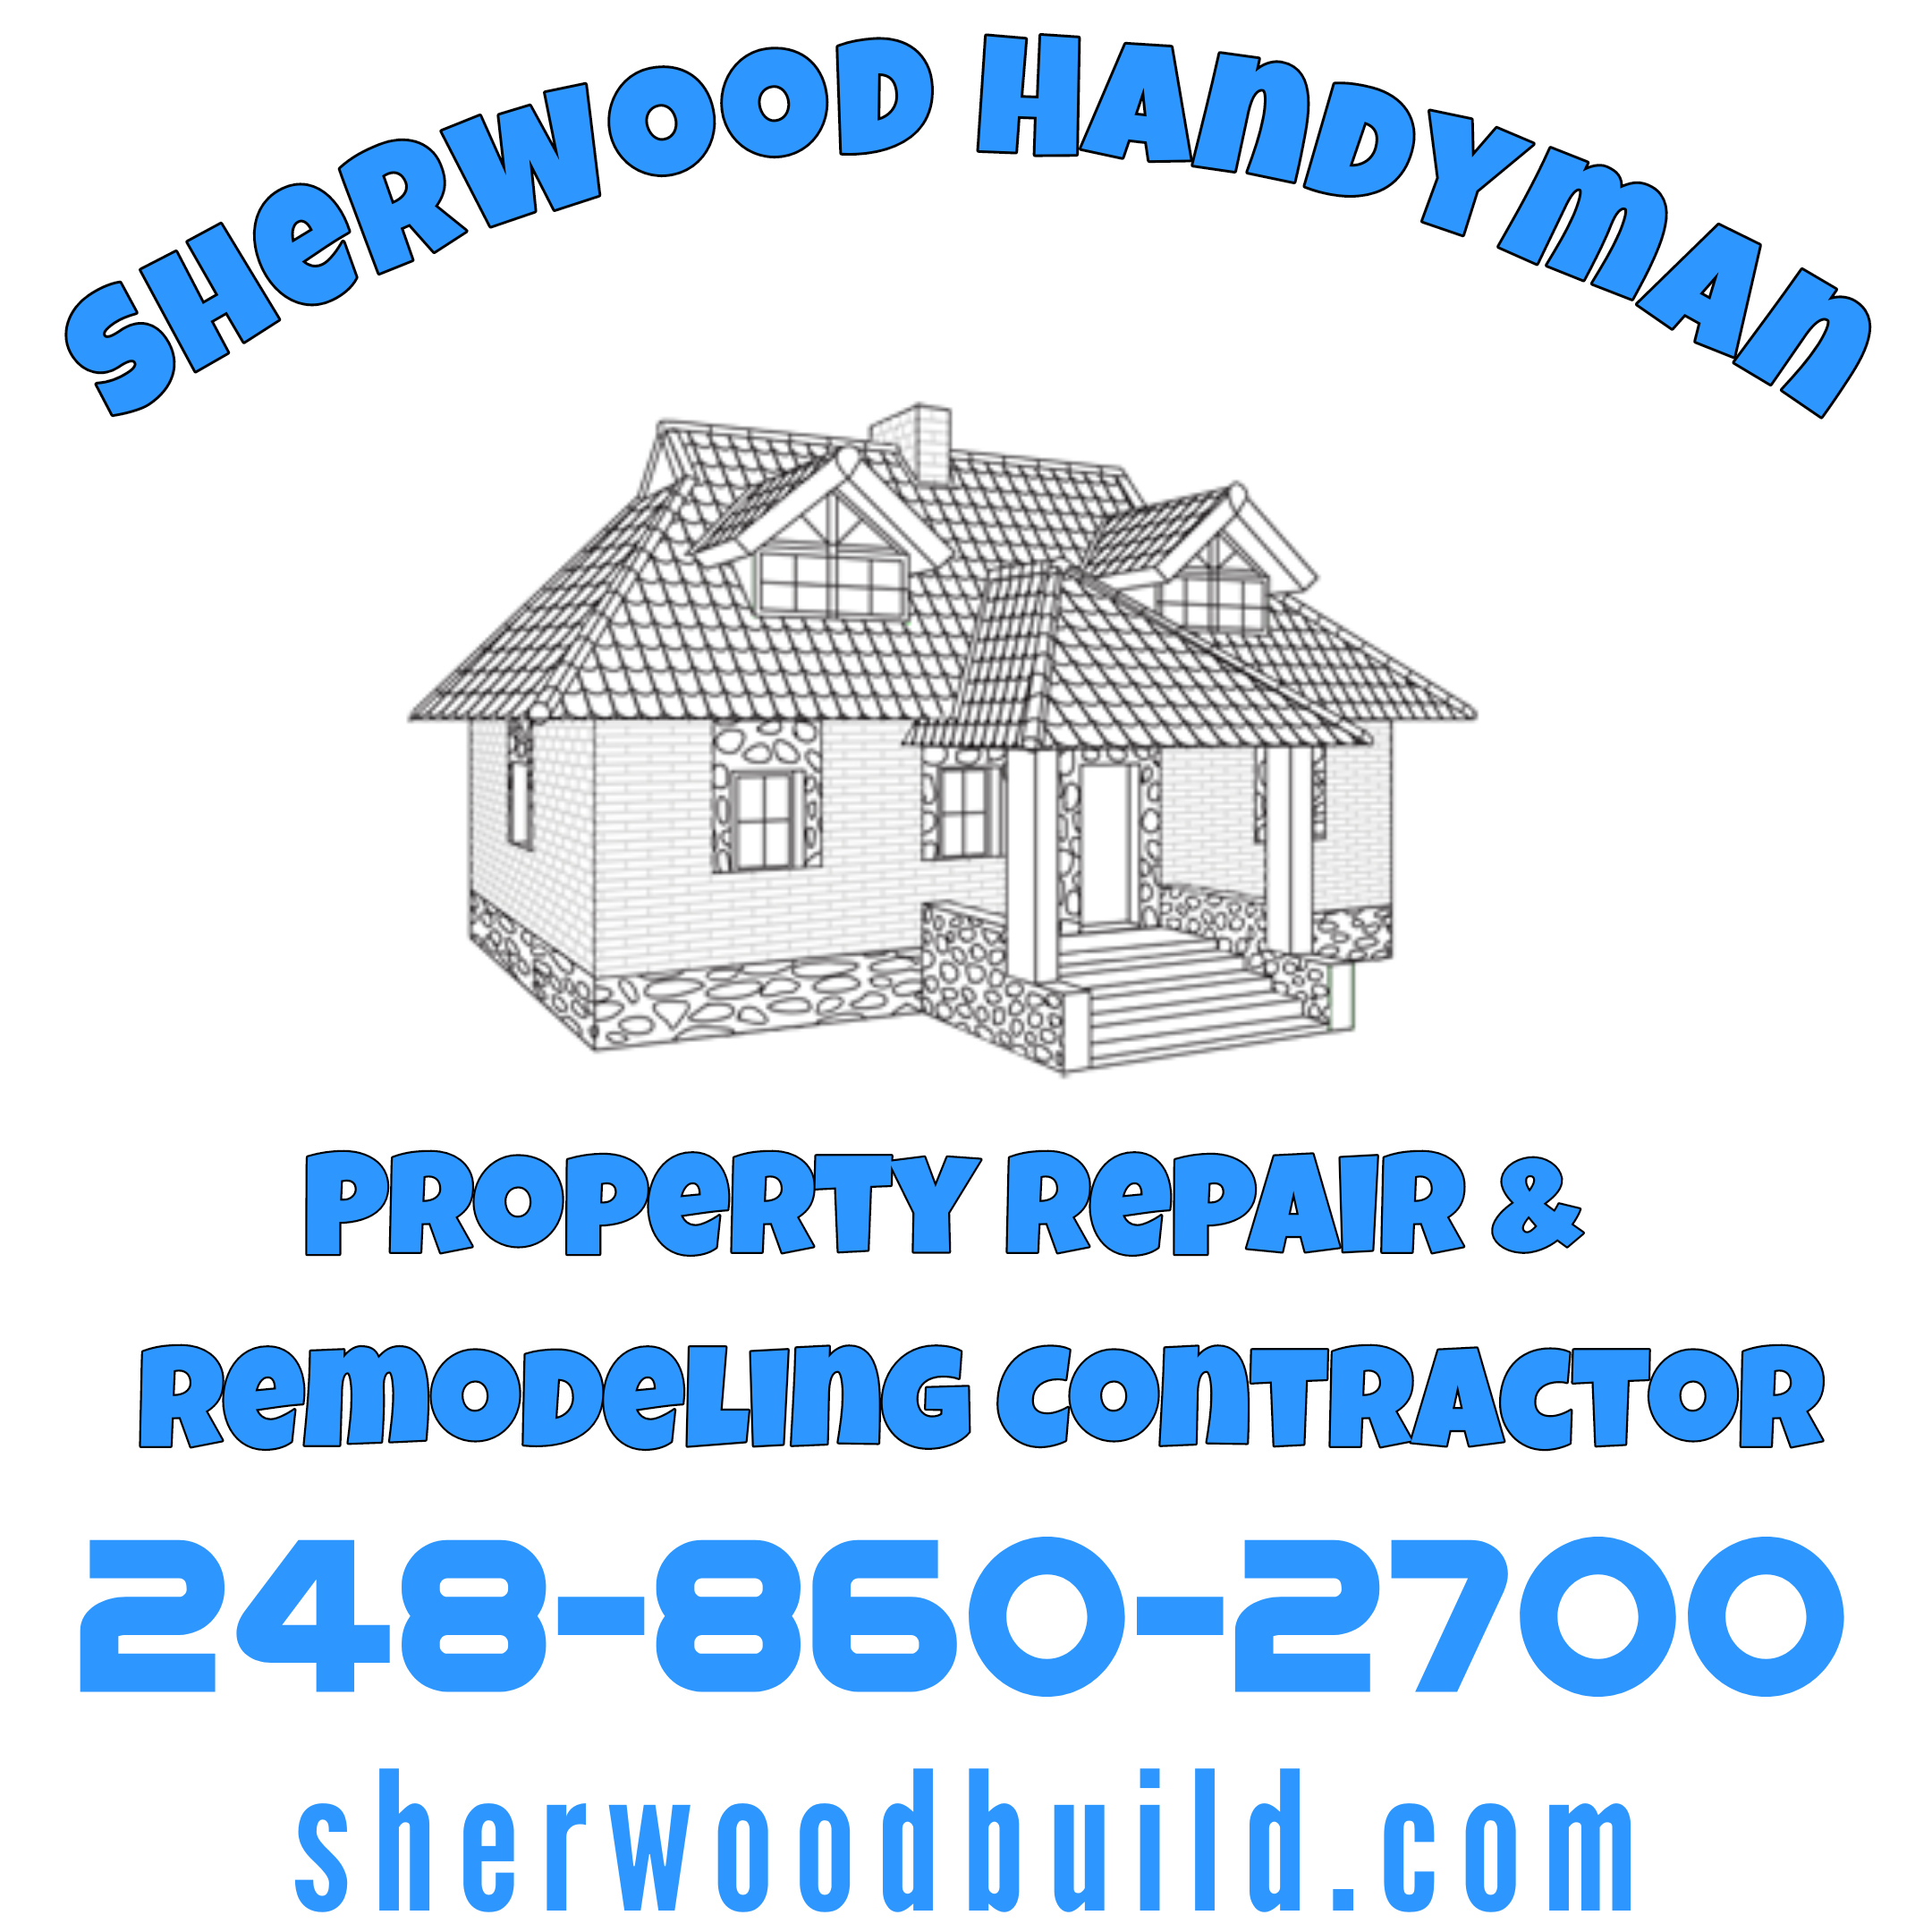 Sherwood Handyman